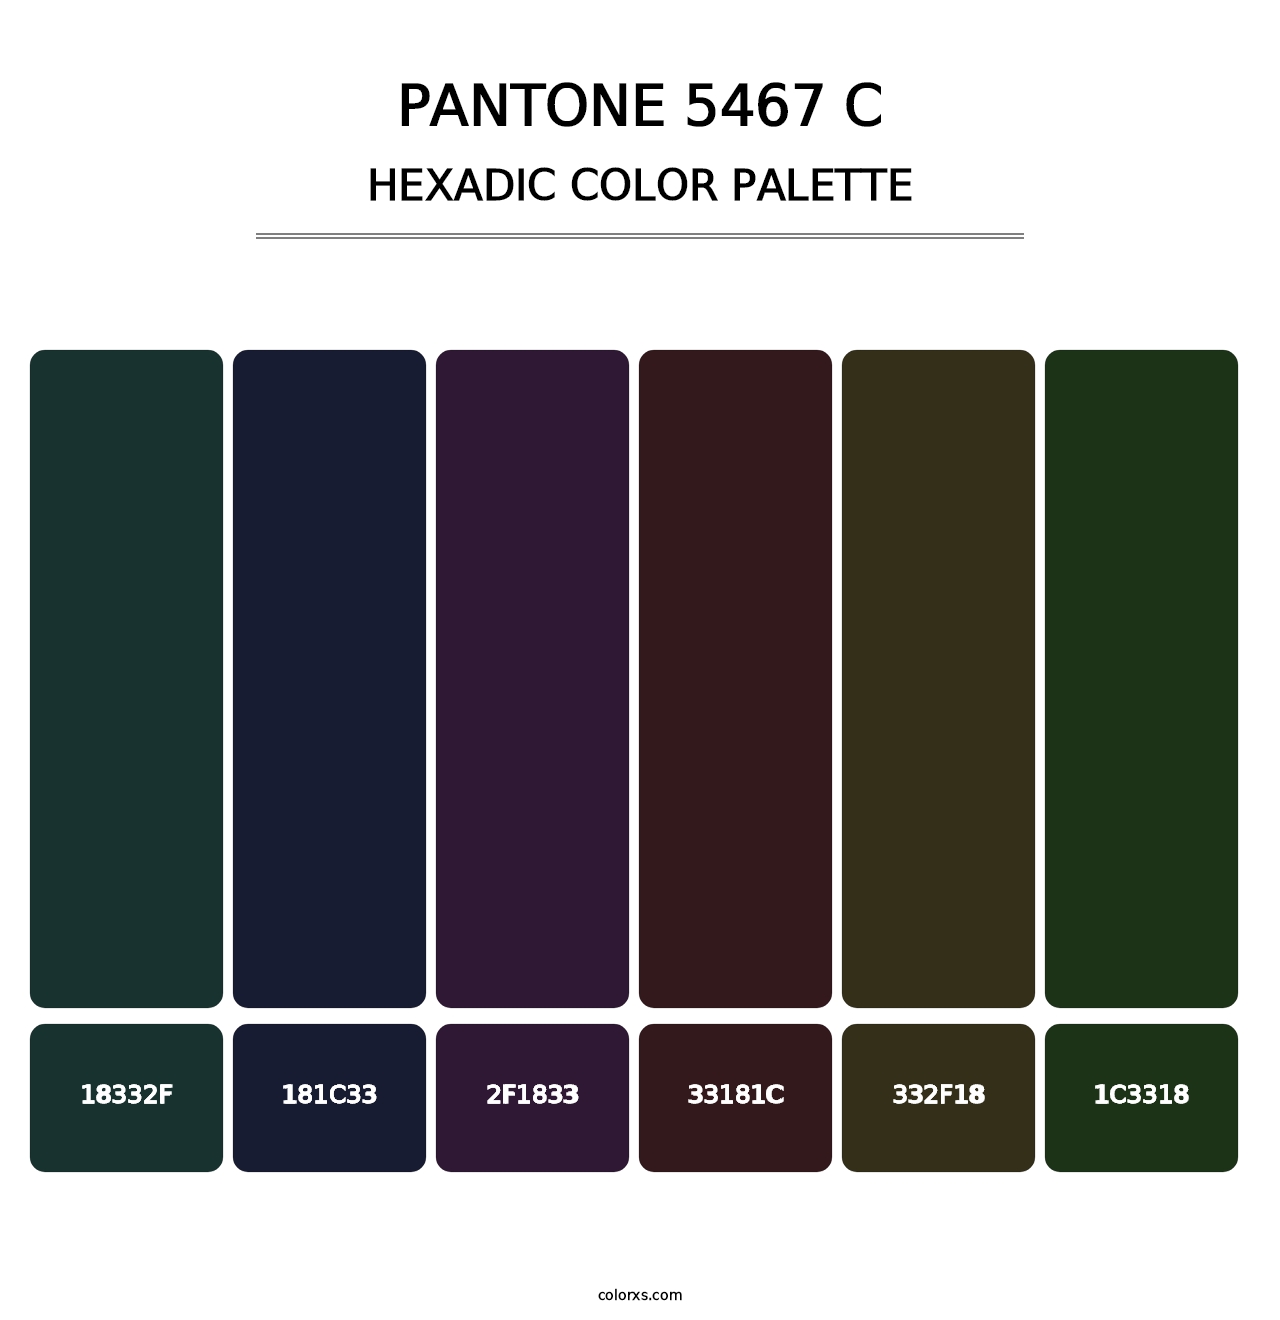 PANTONE 5467 C - Hexadic Color Palette